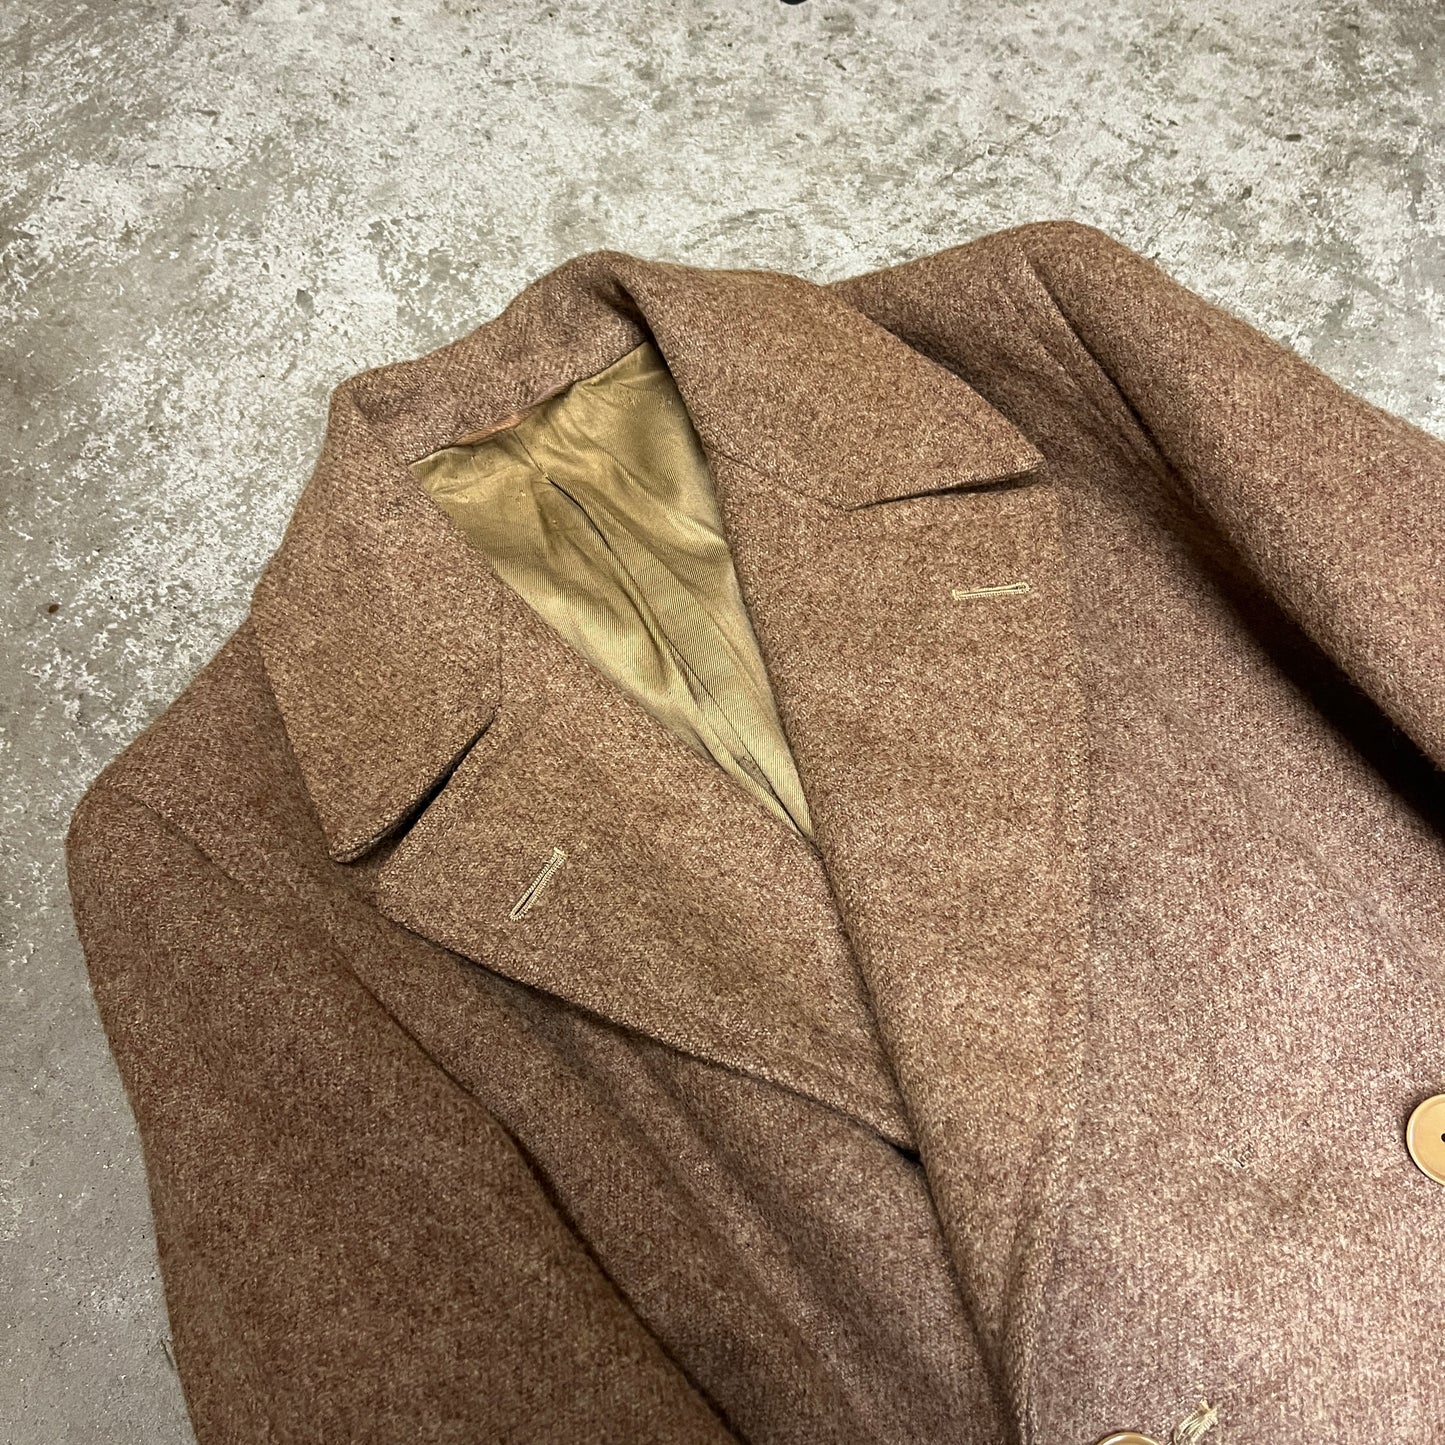 CC41 1940s Overcoat By Montague Burton